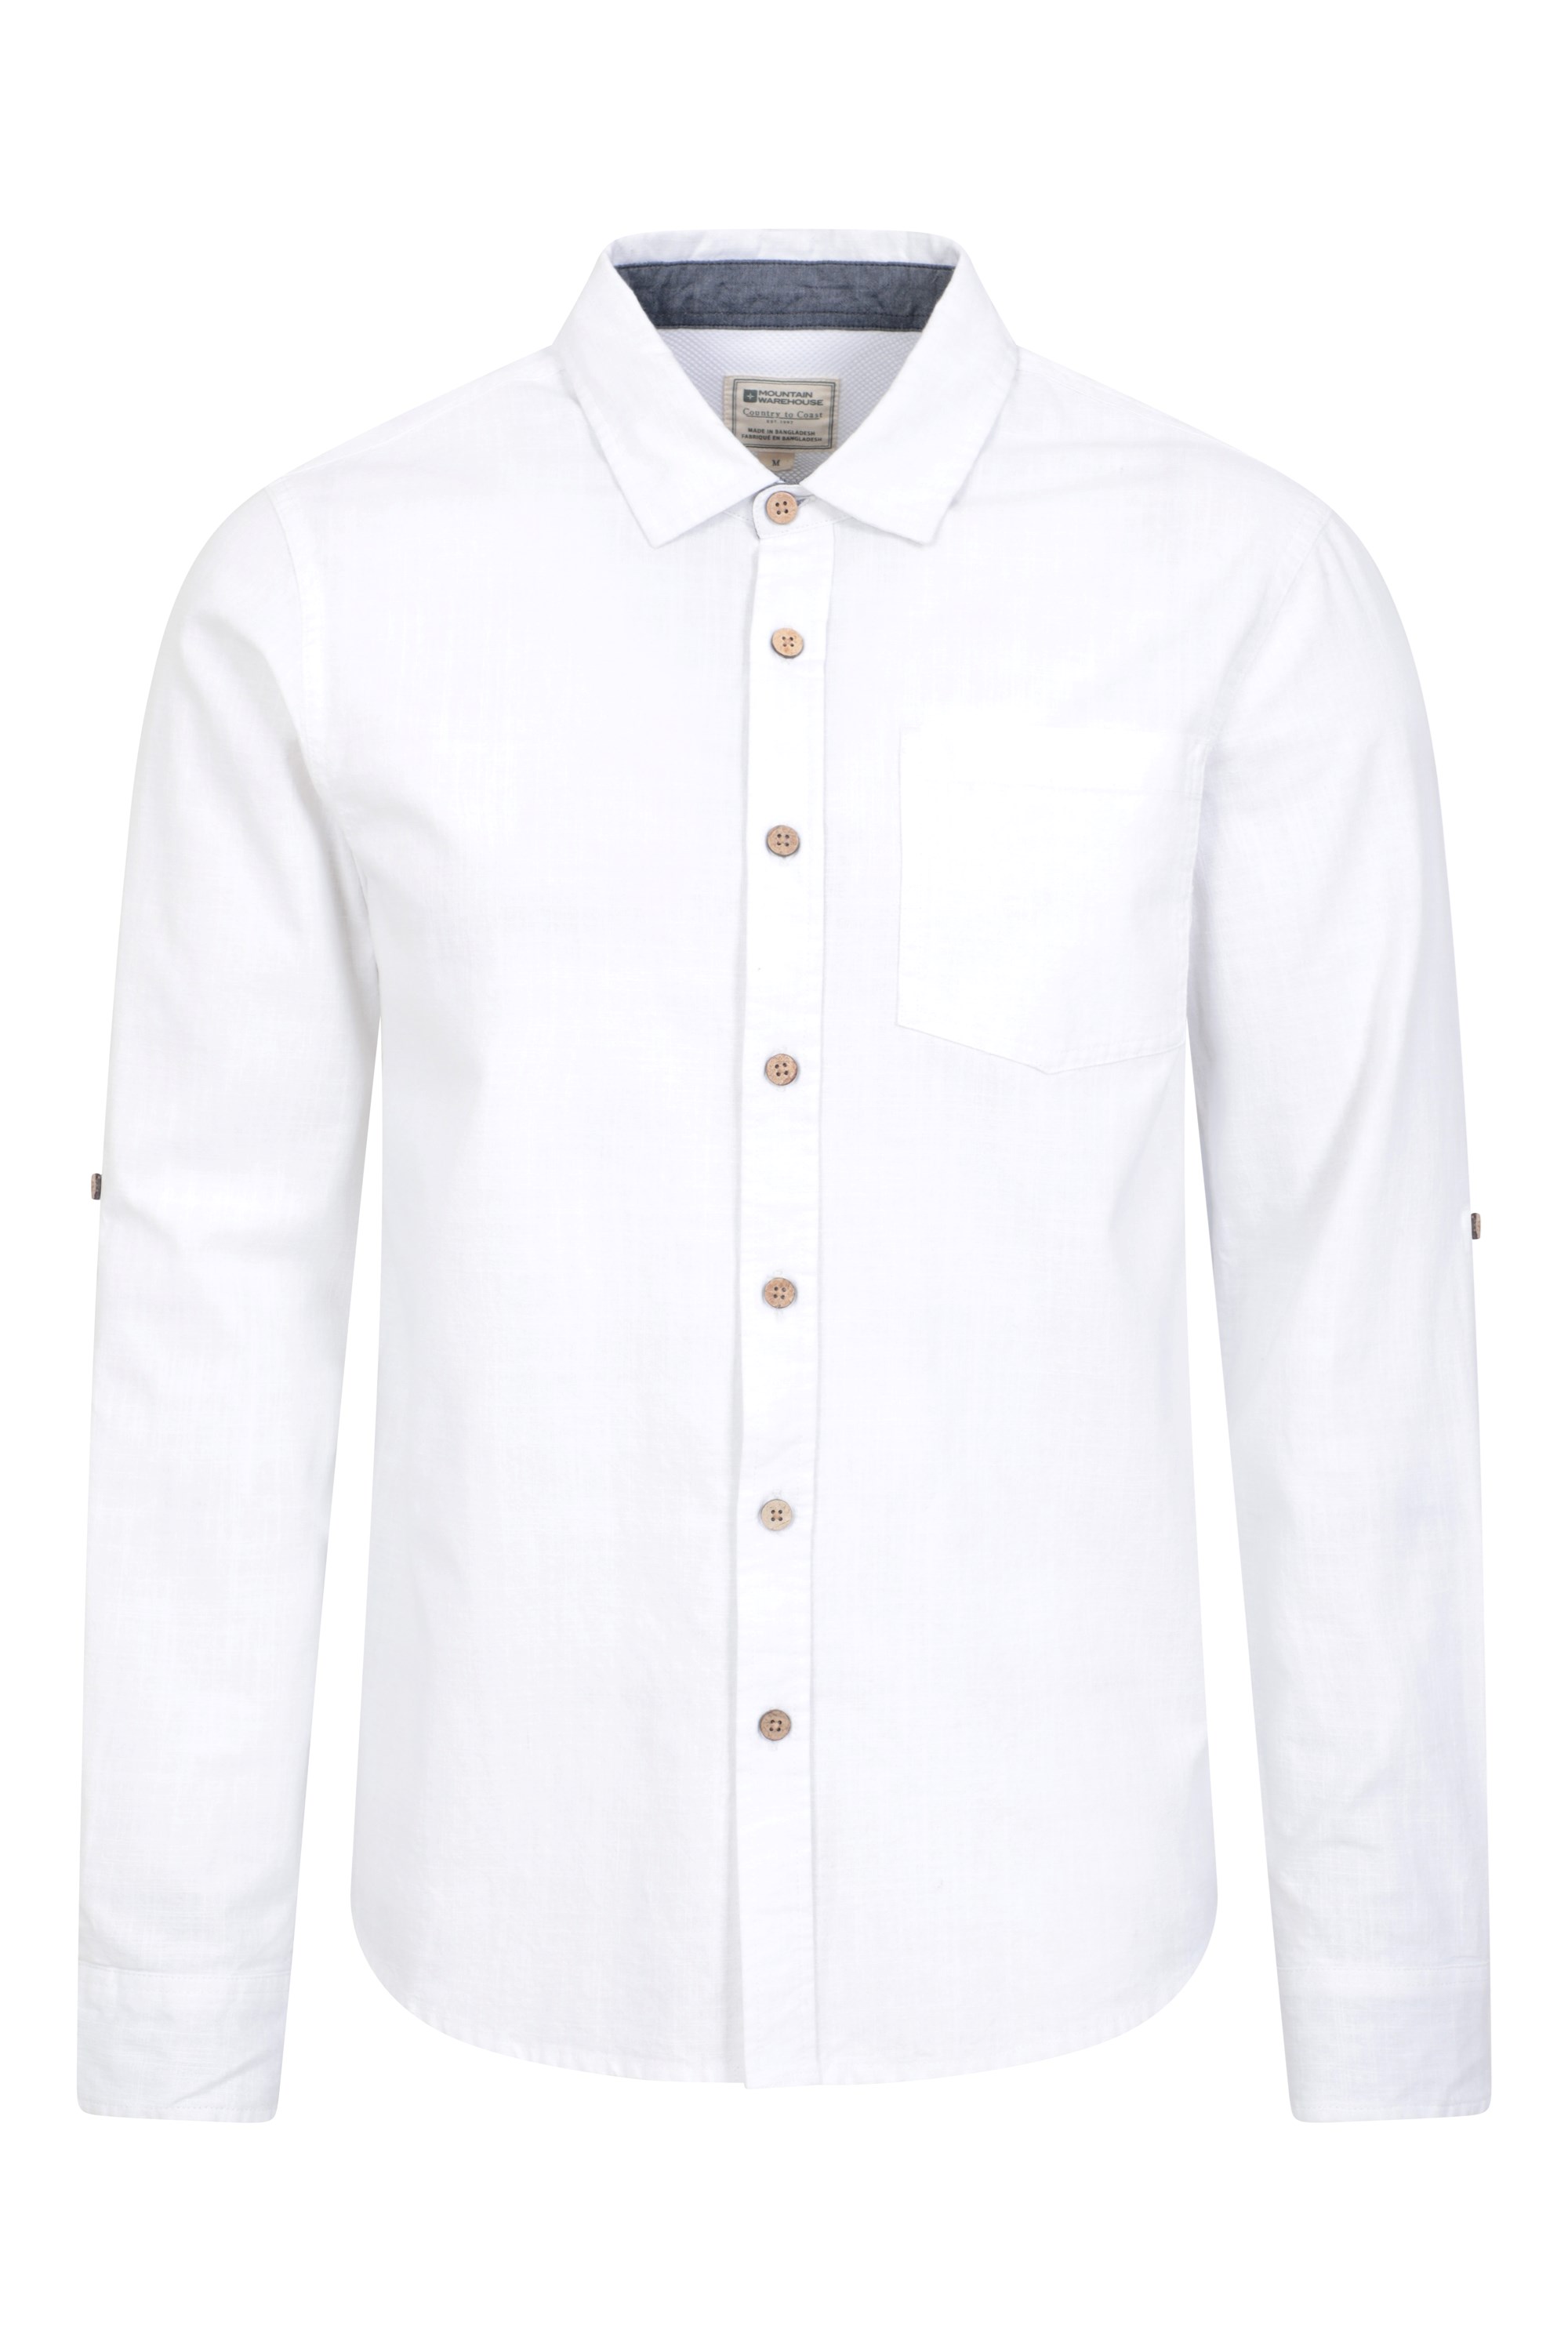 Coconut Textured Mens Long Sleeved Shirt - White